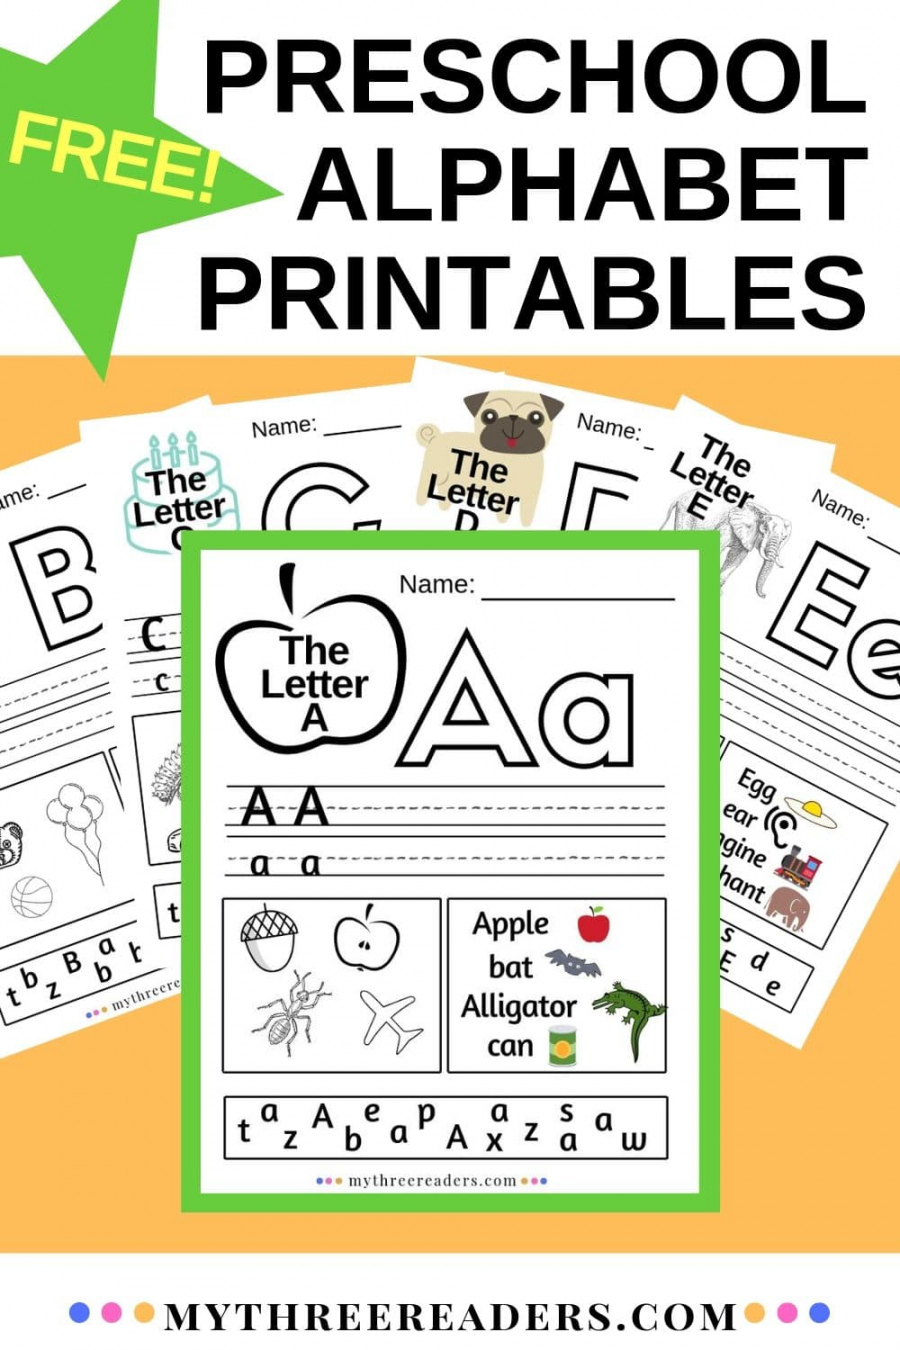 FREE  Preschool Printable Alphabet Worksheets A-Z